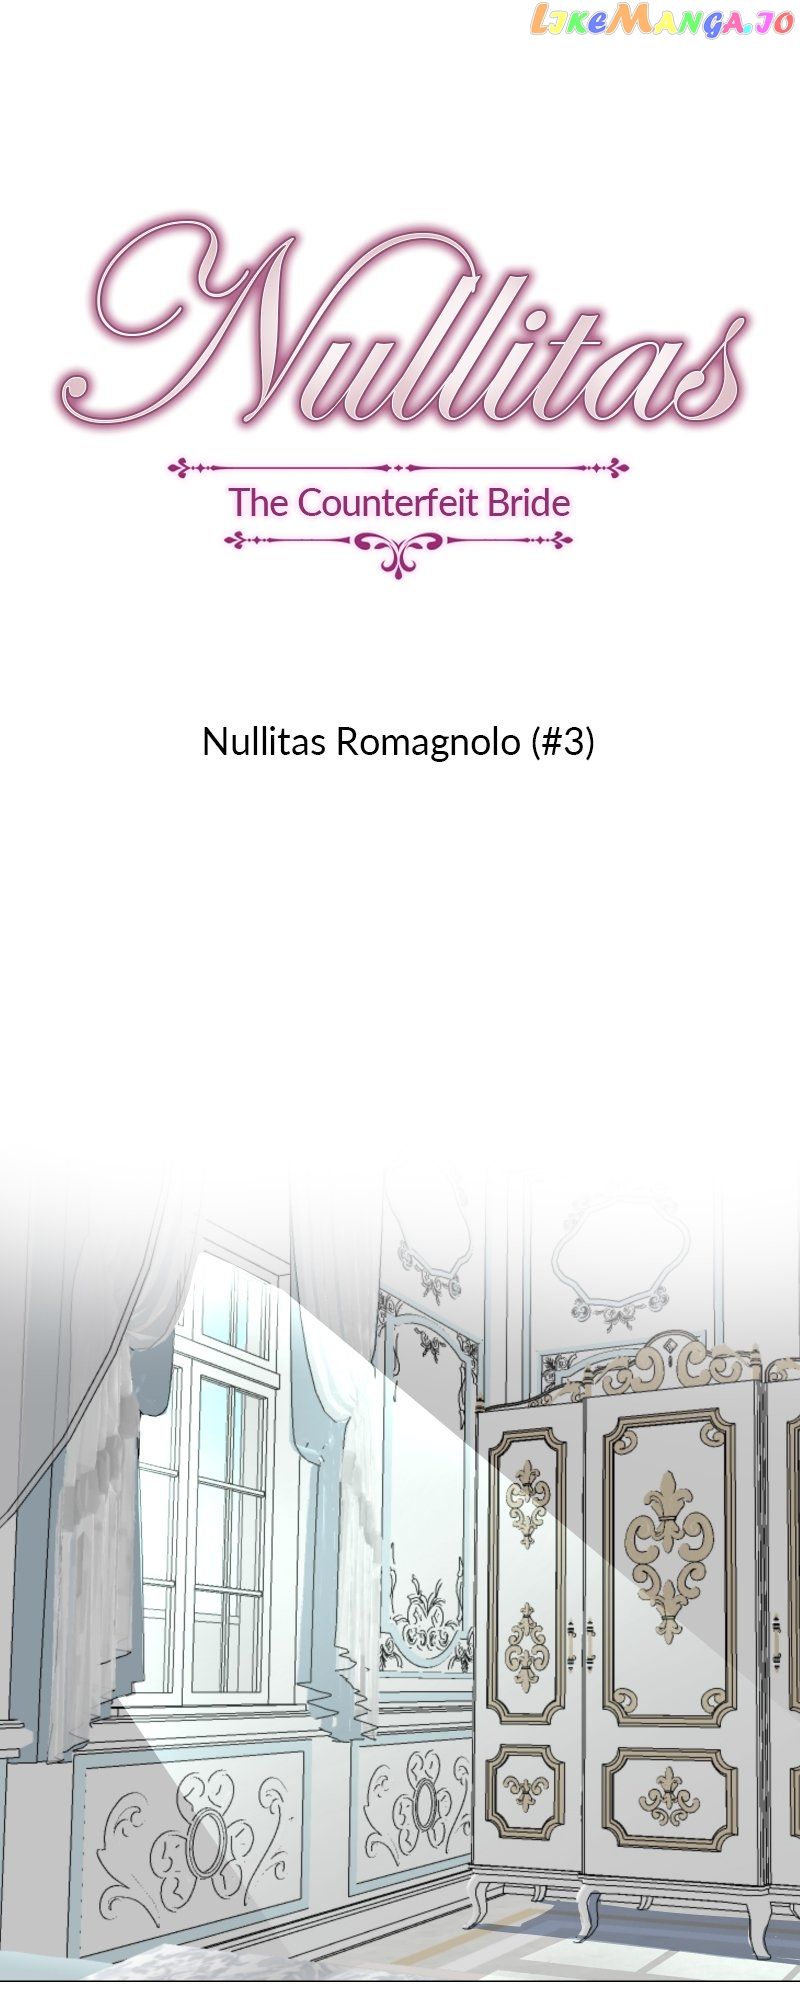 Nulliitas: The Half-Blood Royalty - Page 1